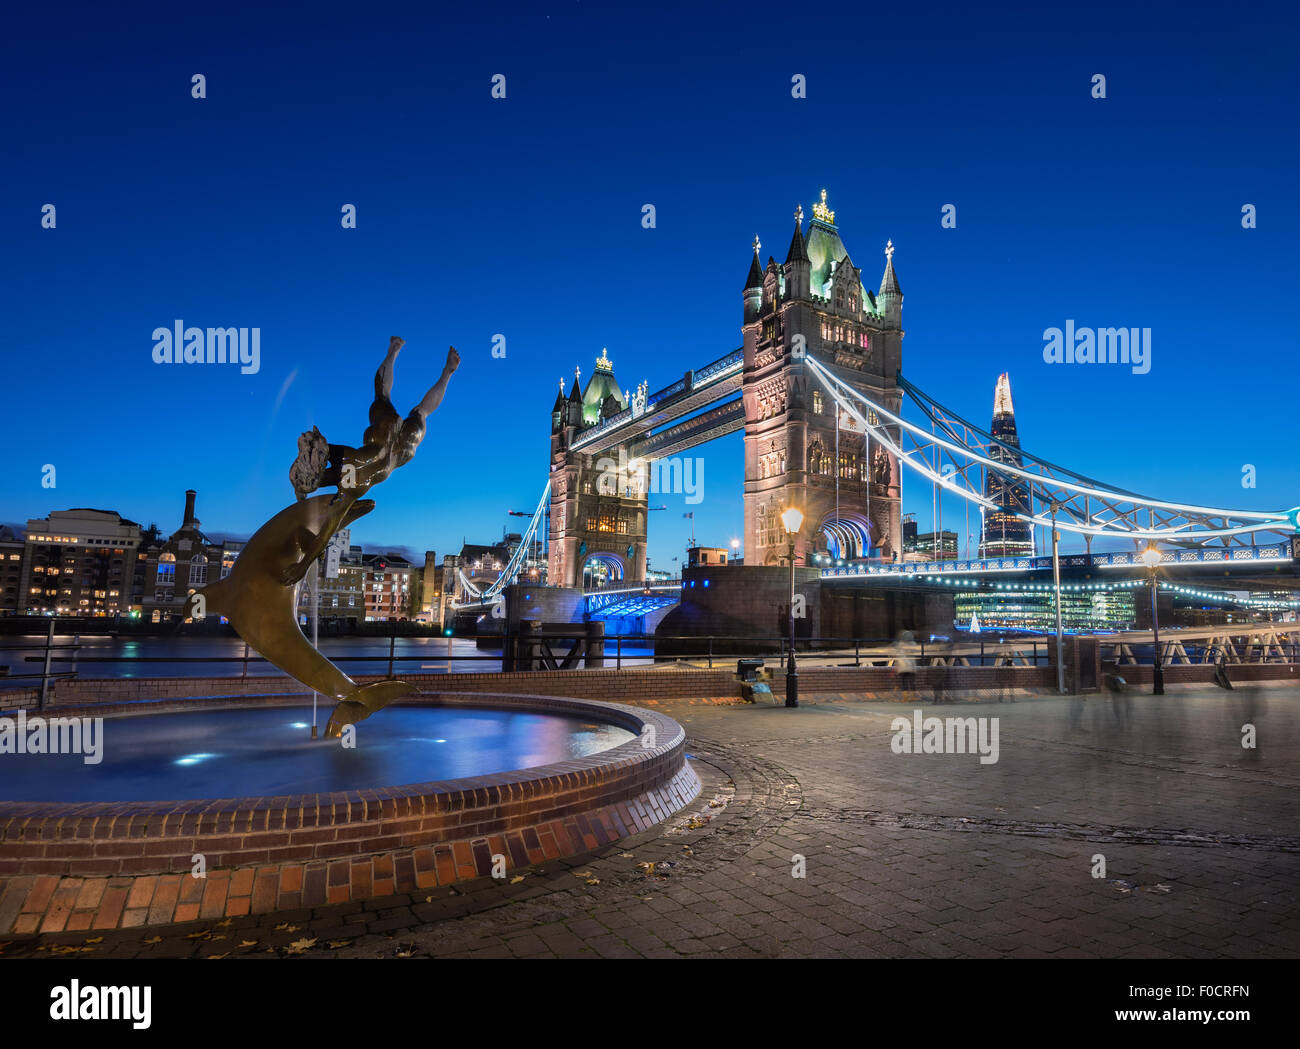 Tower bridge is the most iconic landmark of London, England. Stock Photo